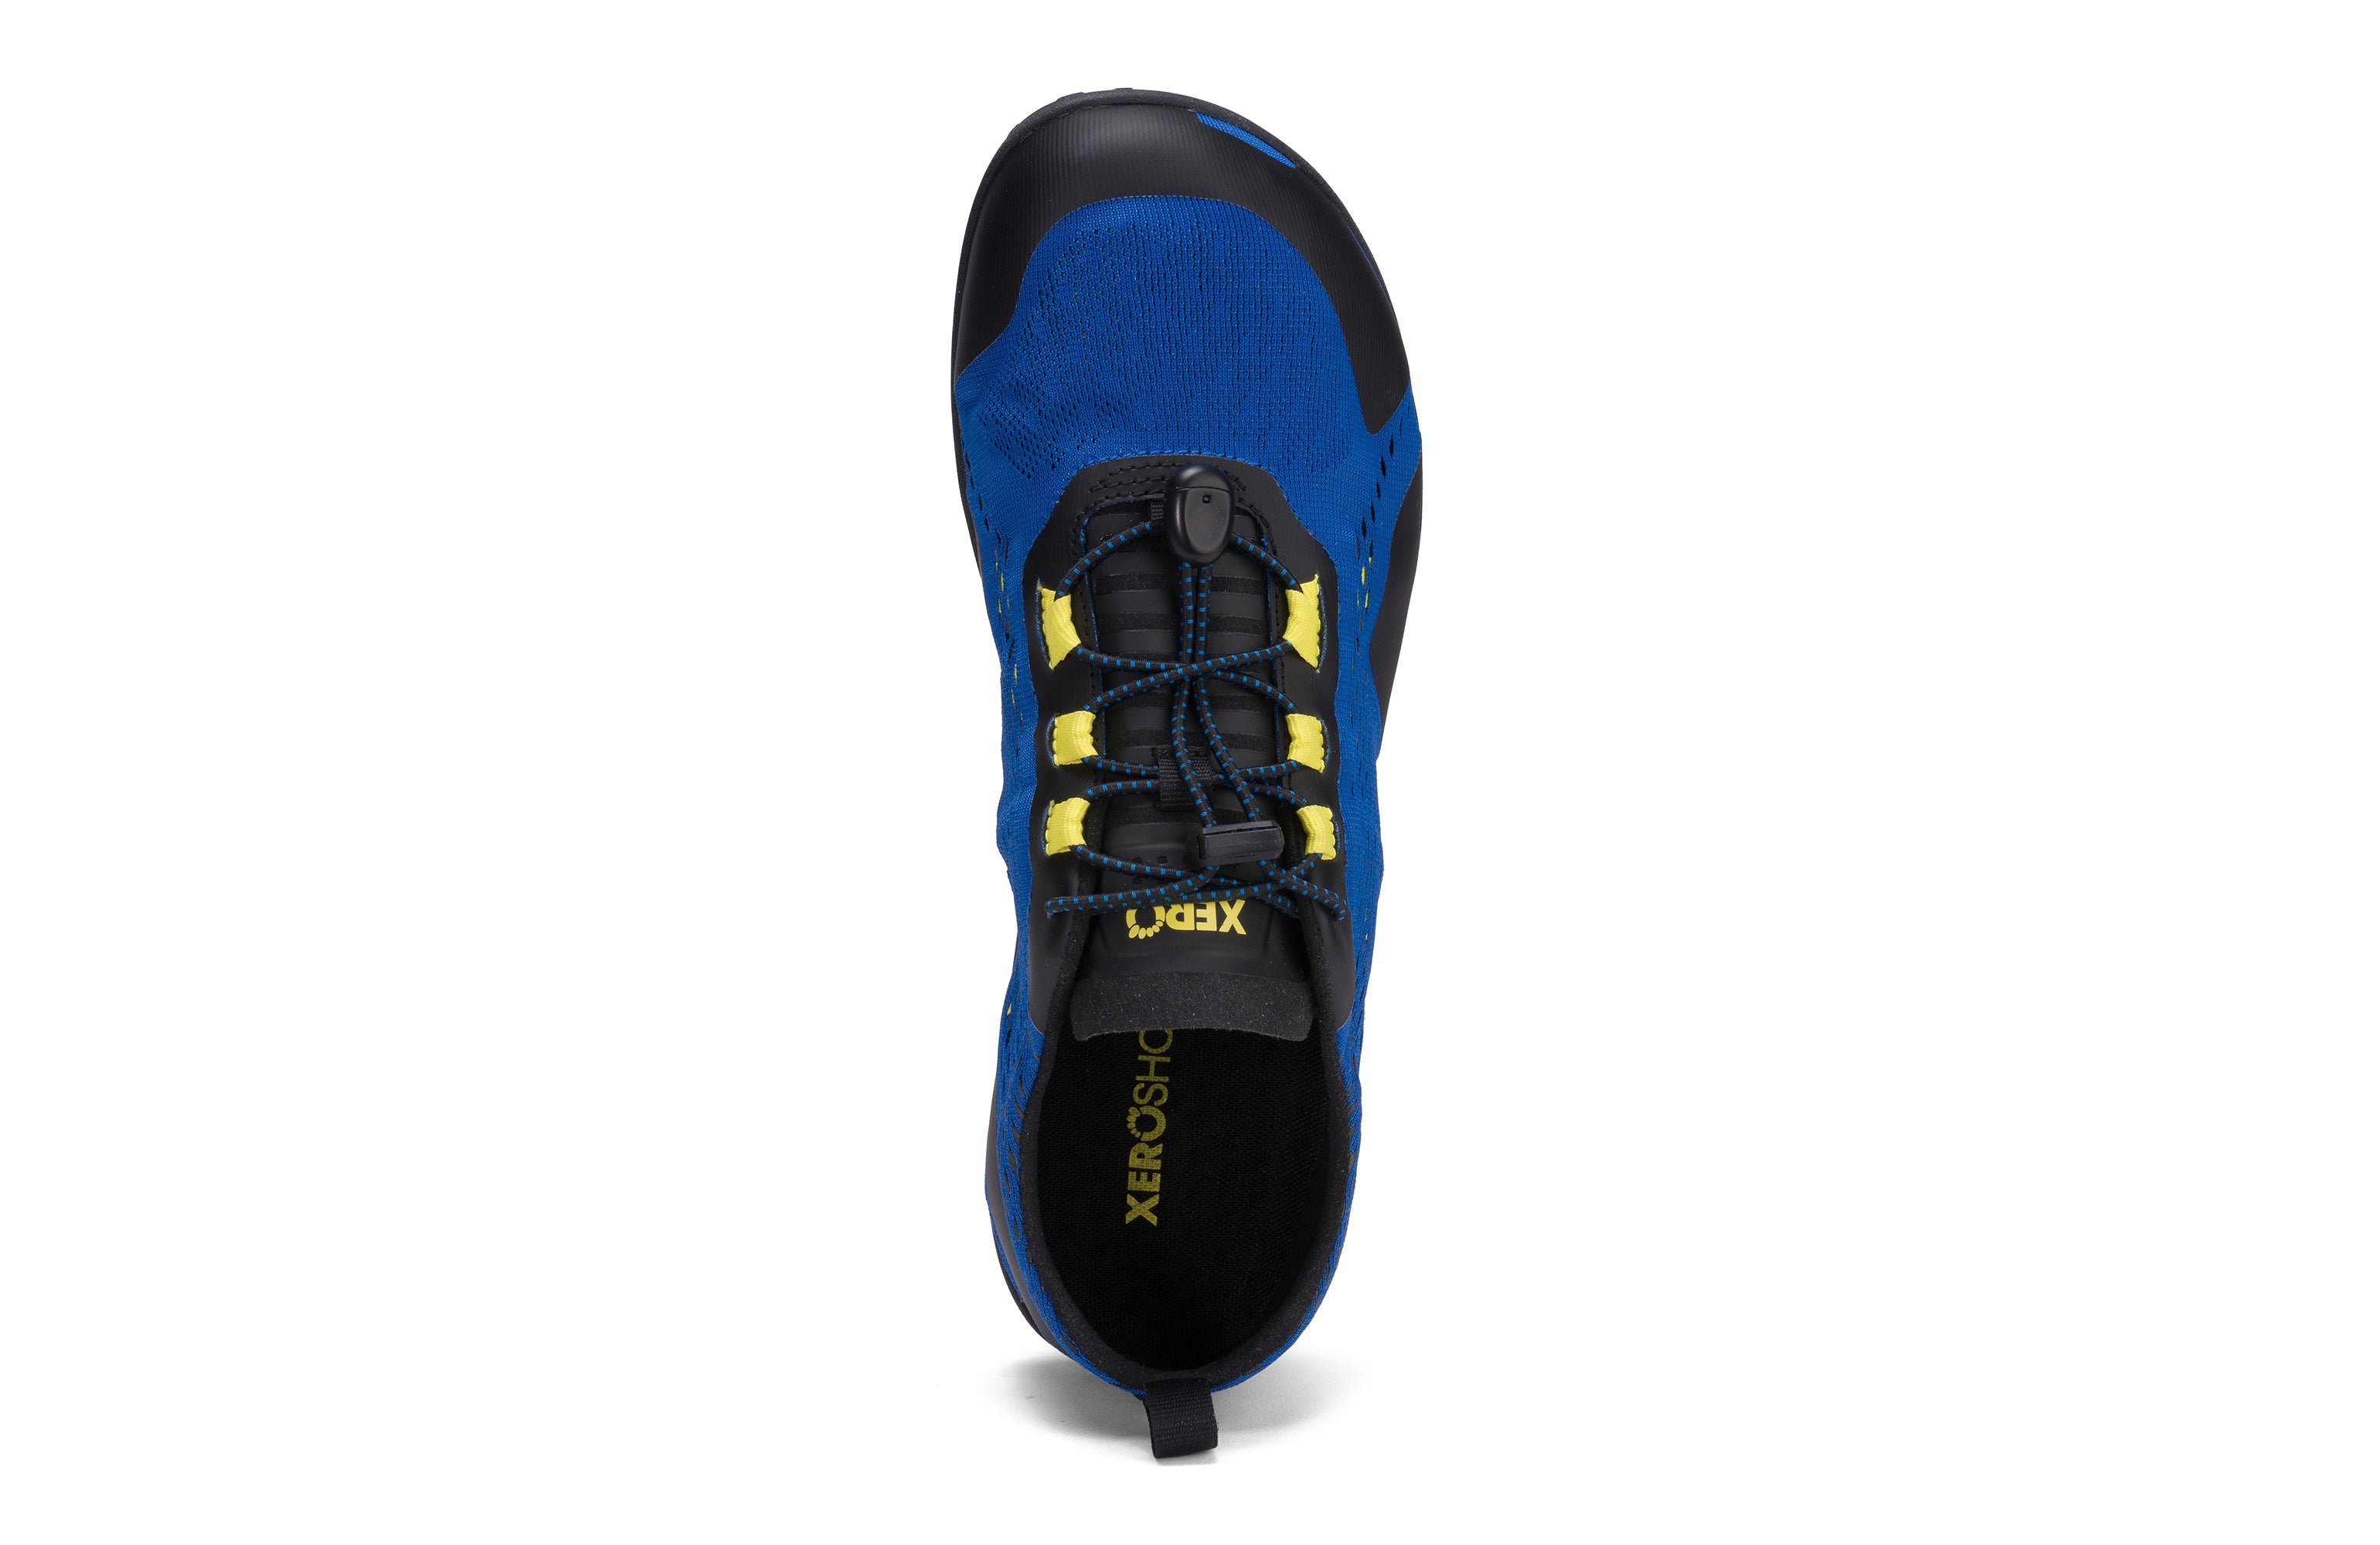 Xero Shoes Aqua X Sport barfods vand træningssko til mænd i farven blue / yellow, top